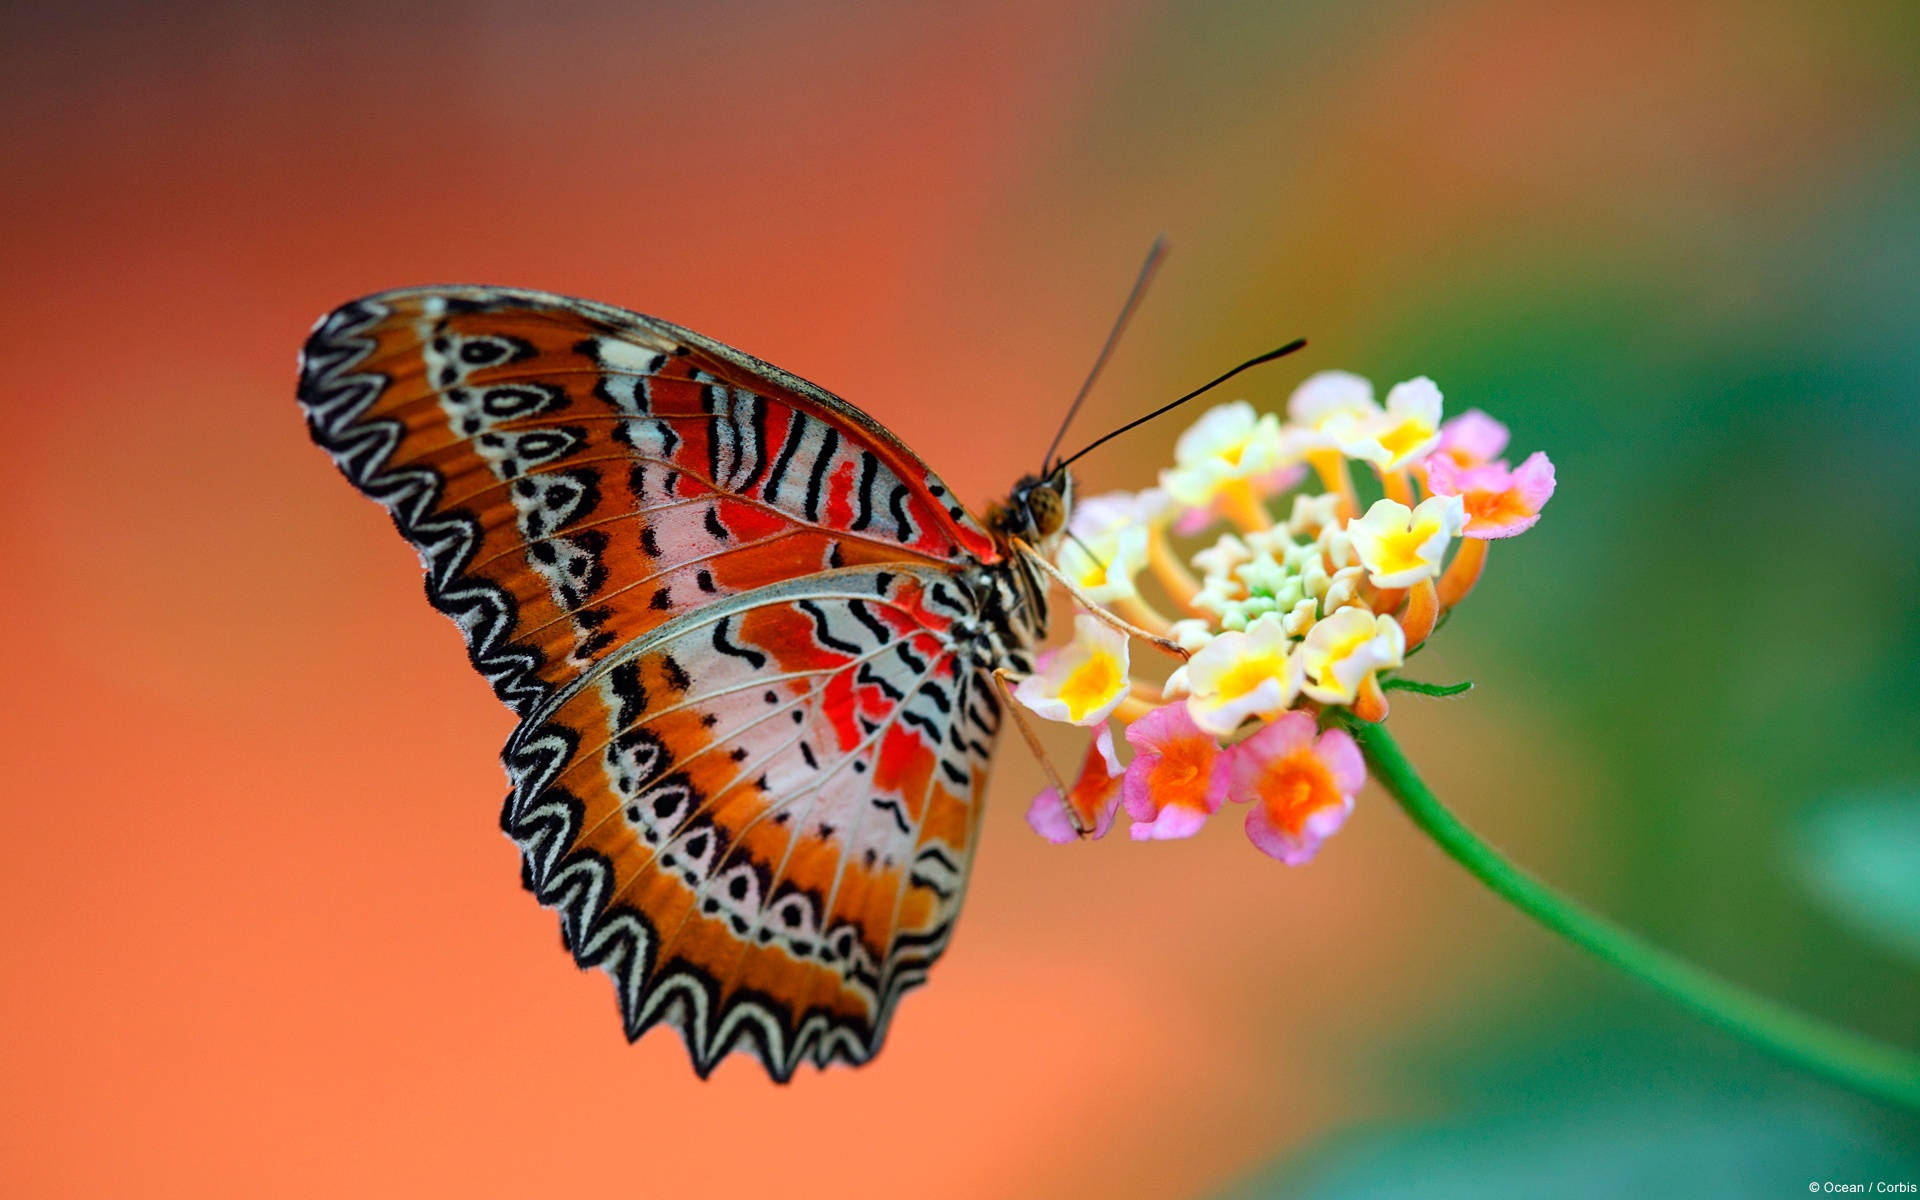 Download Colorful Butterfly Full Screen Hd Desktop Wallpaper | Wallpapers .com